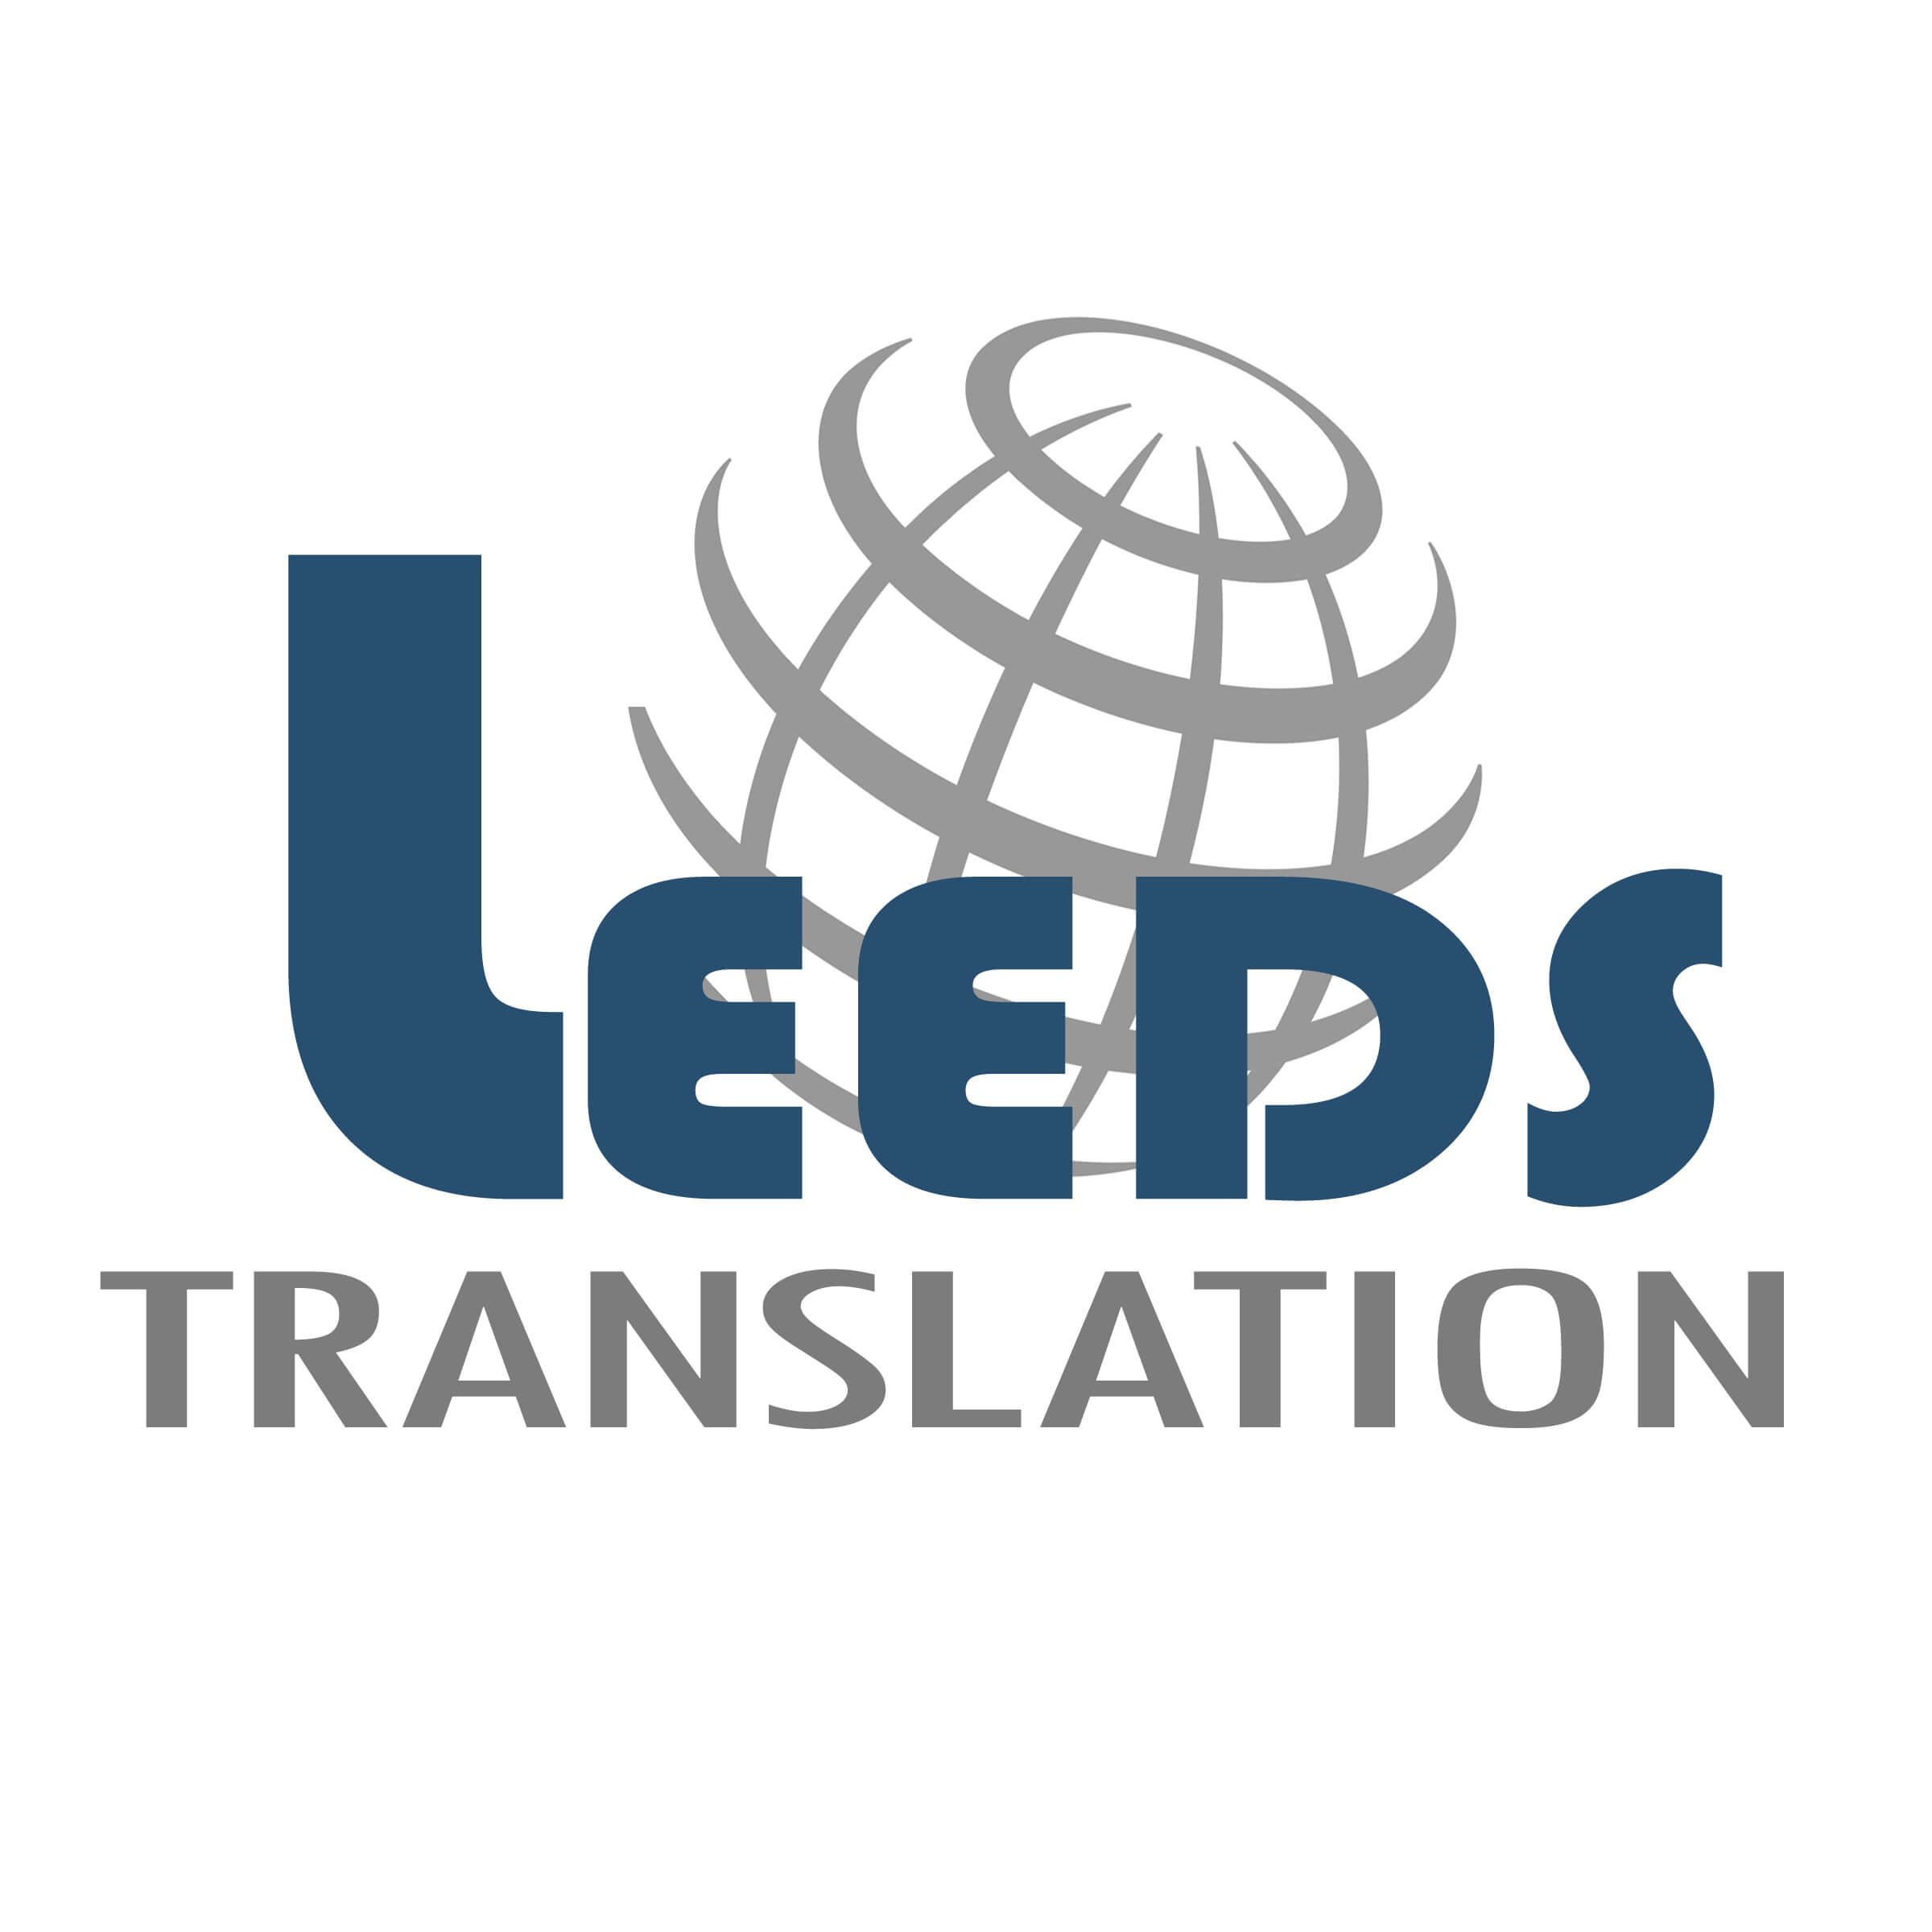 (c) Leedstranslation.co.uk